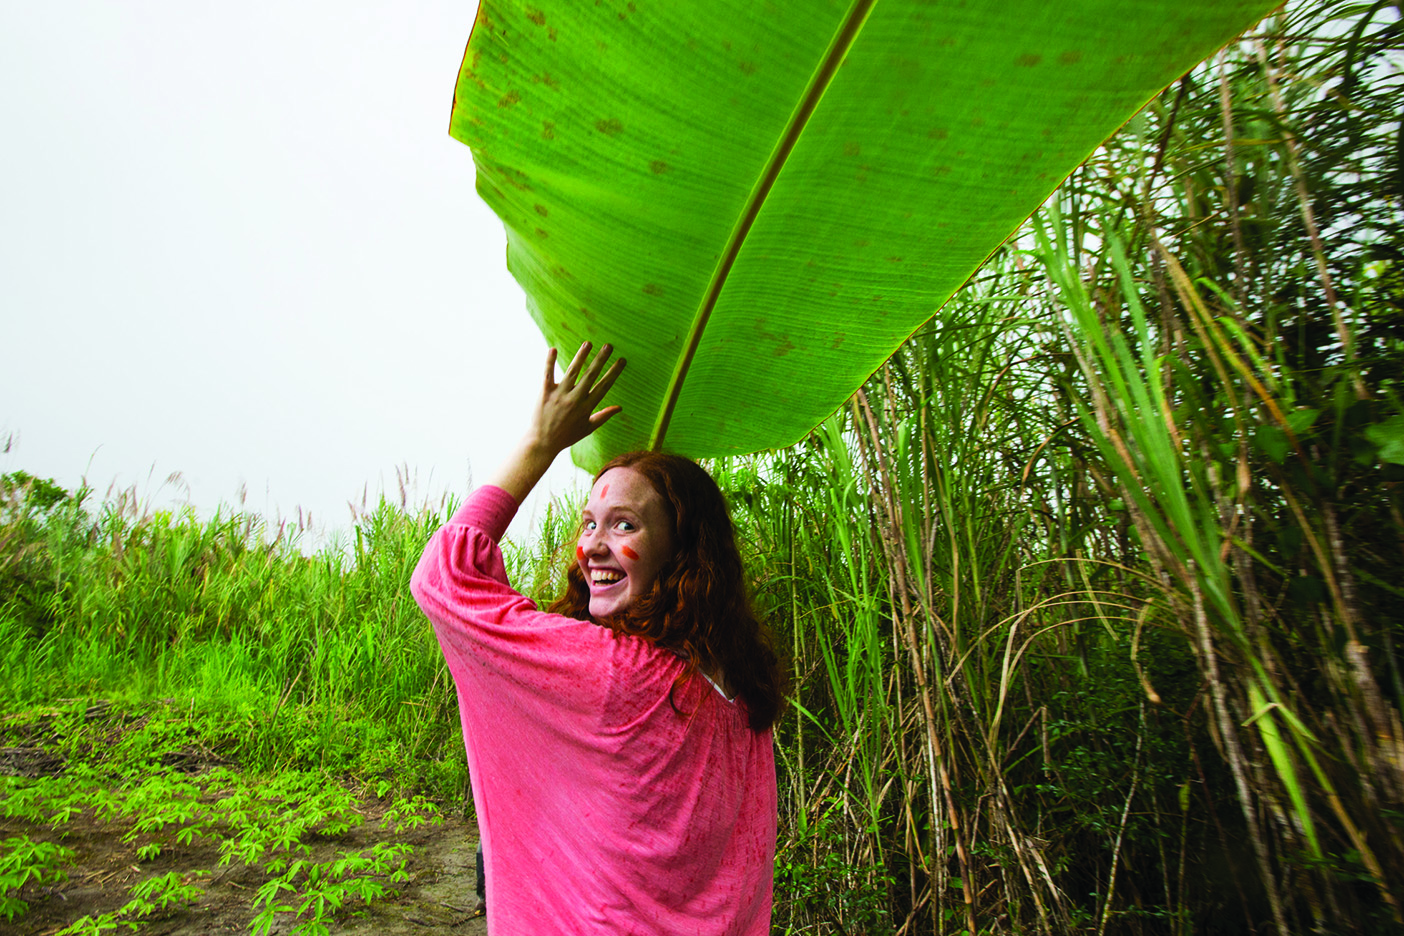 student Sydney Jensen finds shelter from a passing storm under a banana leaf